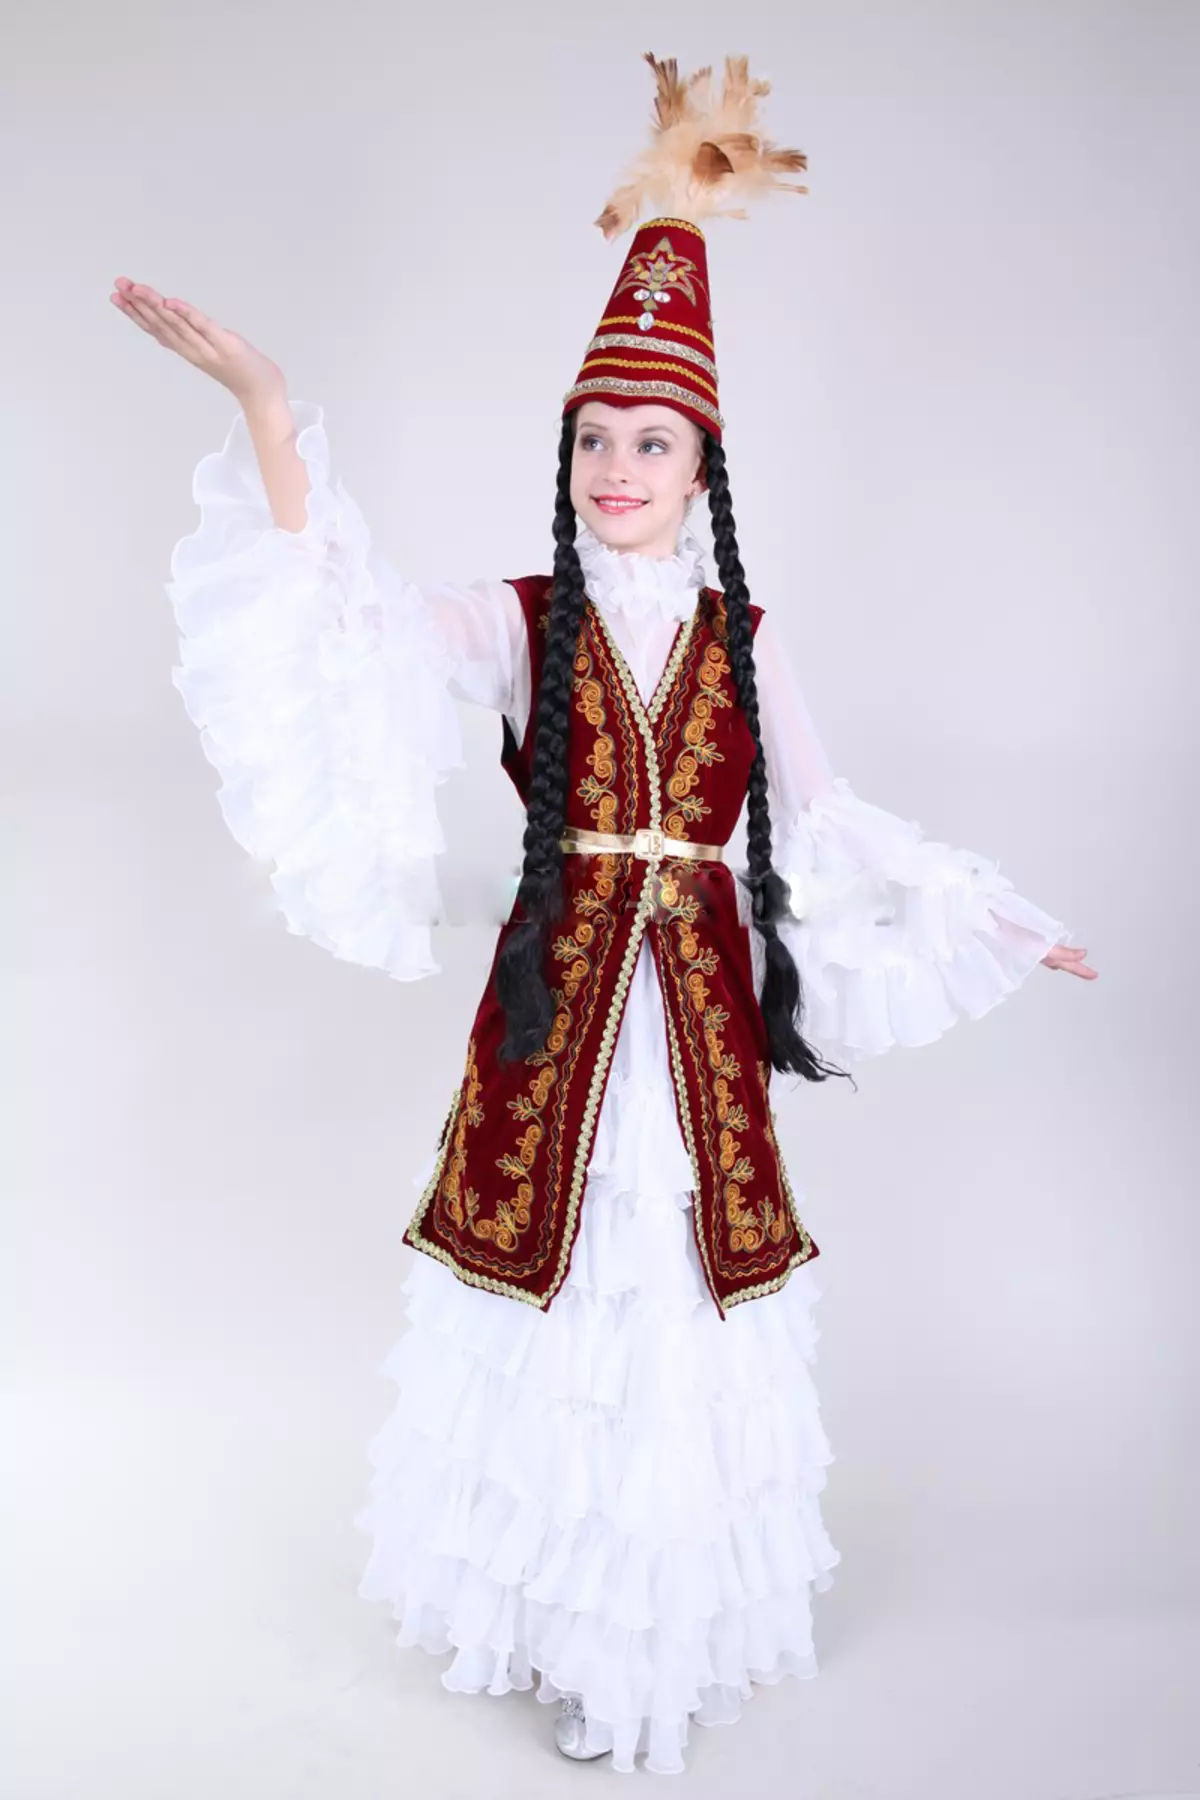 Kazahh Costum Național (68 Fotografii): Costum tradițional de sex feminin Kazahs, costum popular pentru fată din Kazahstan 842_7